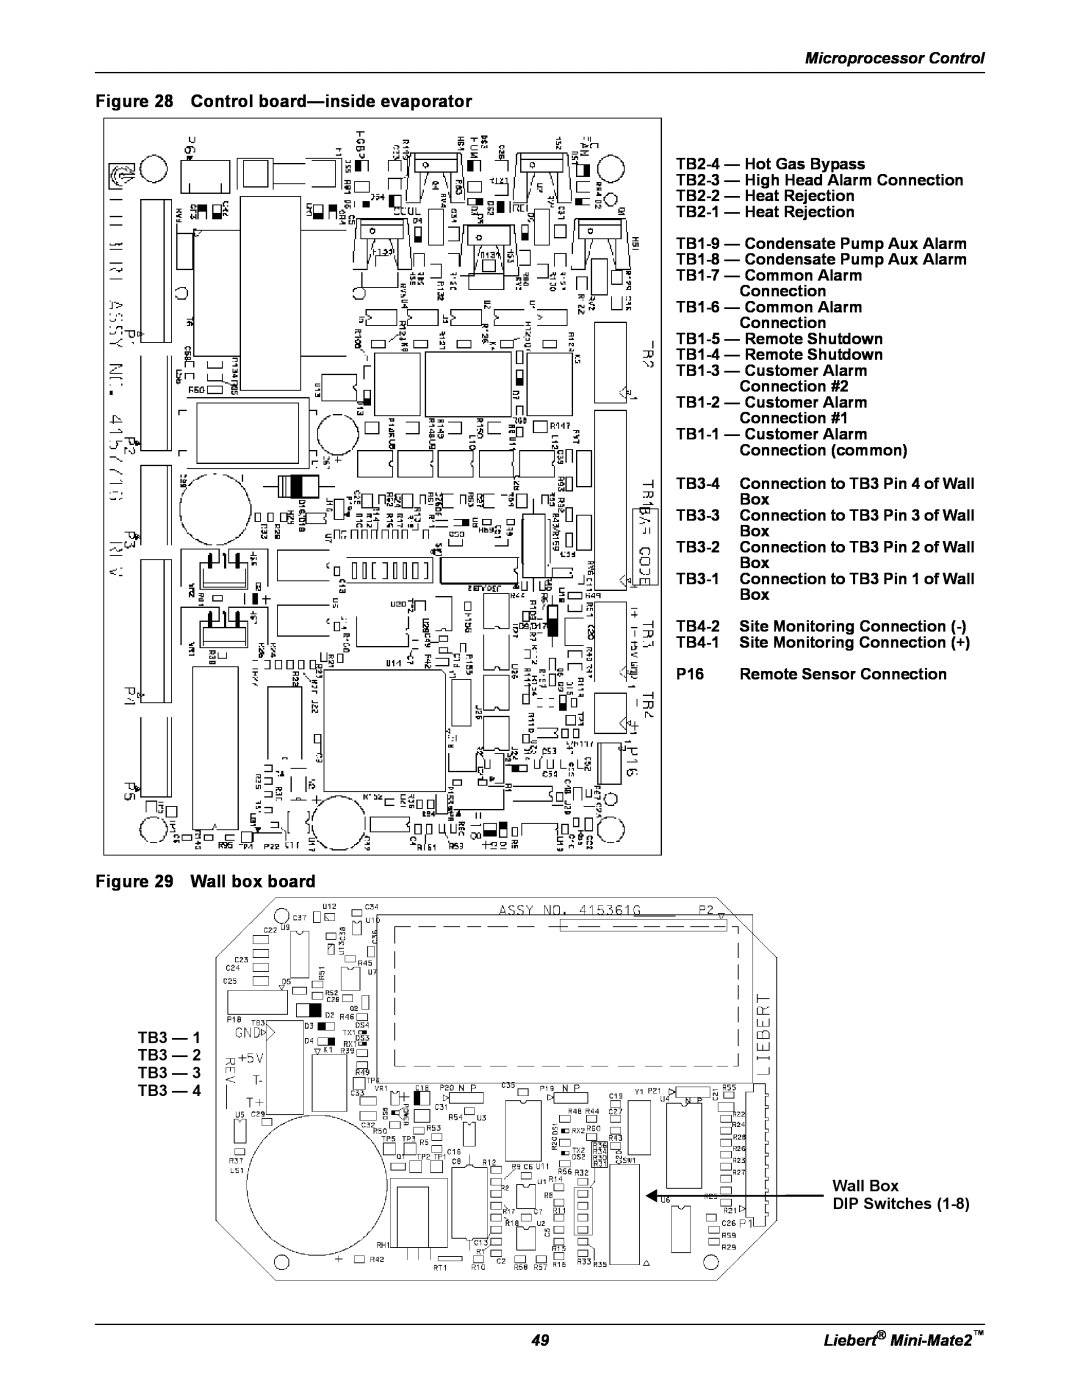 Emerson MINI-MATE2 user manual Control board-insideevaporator, Wall box board, Microprocessor Control 